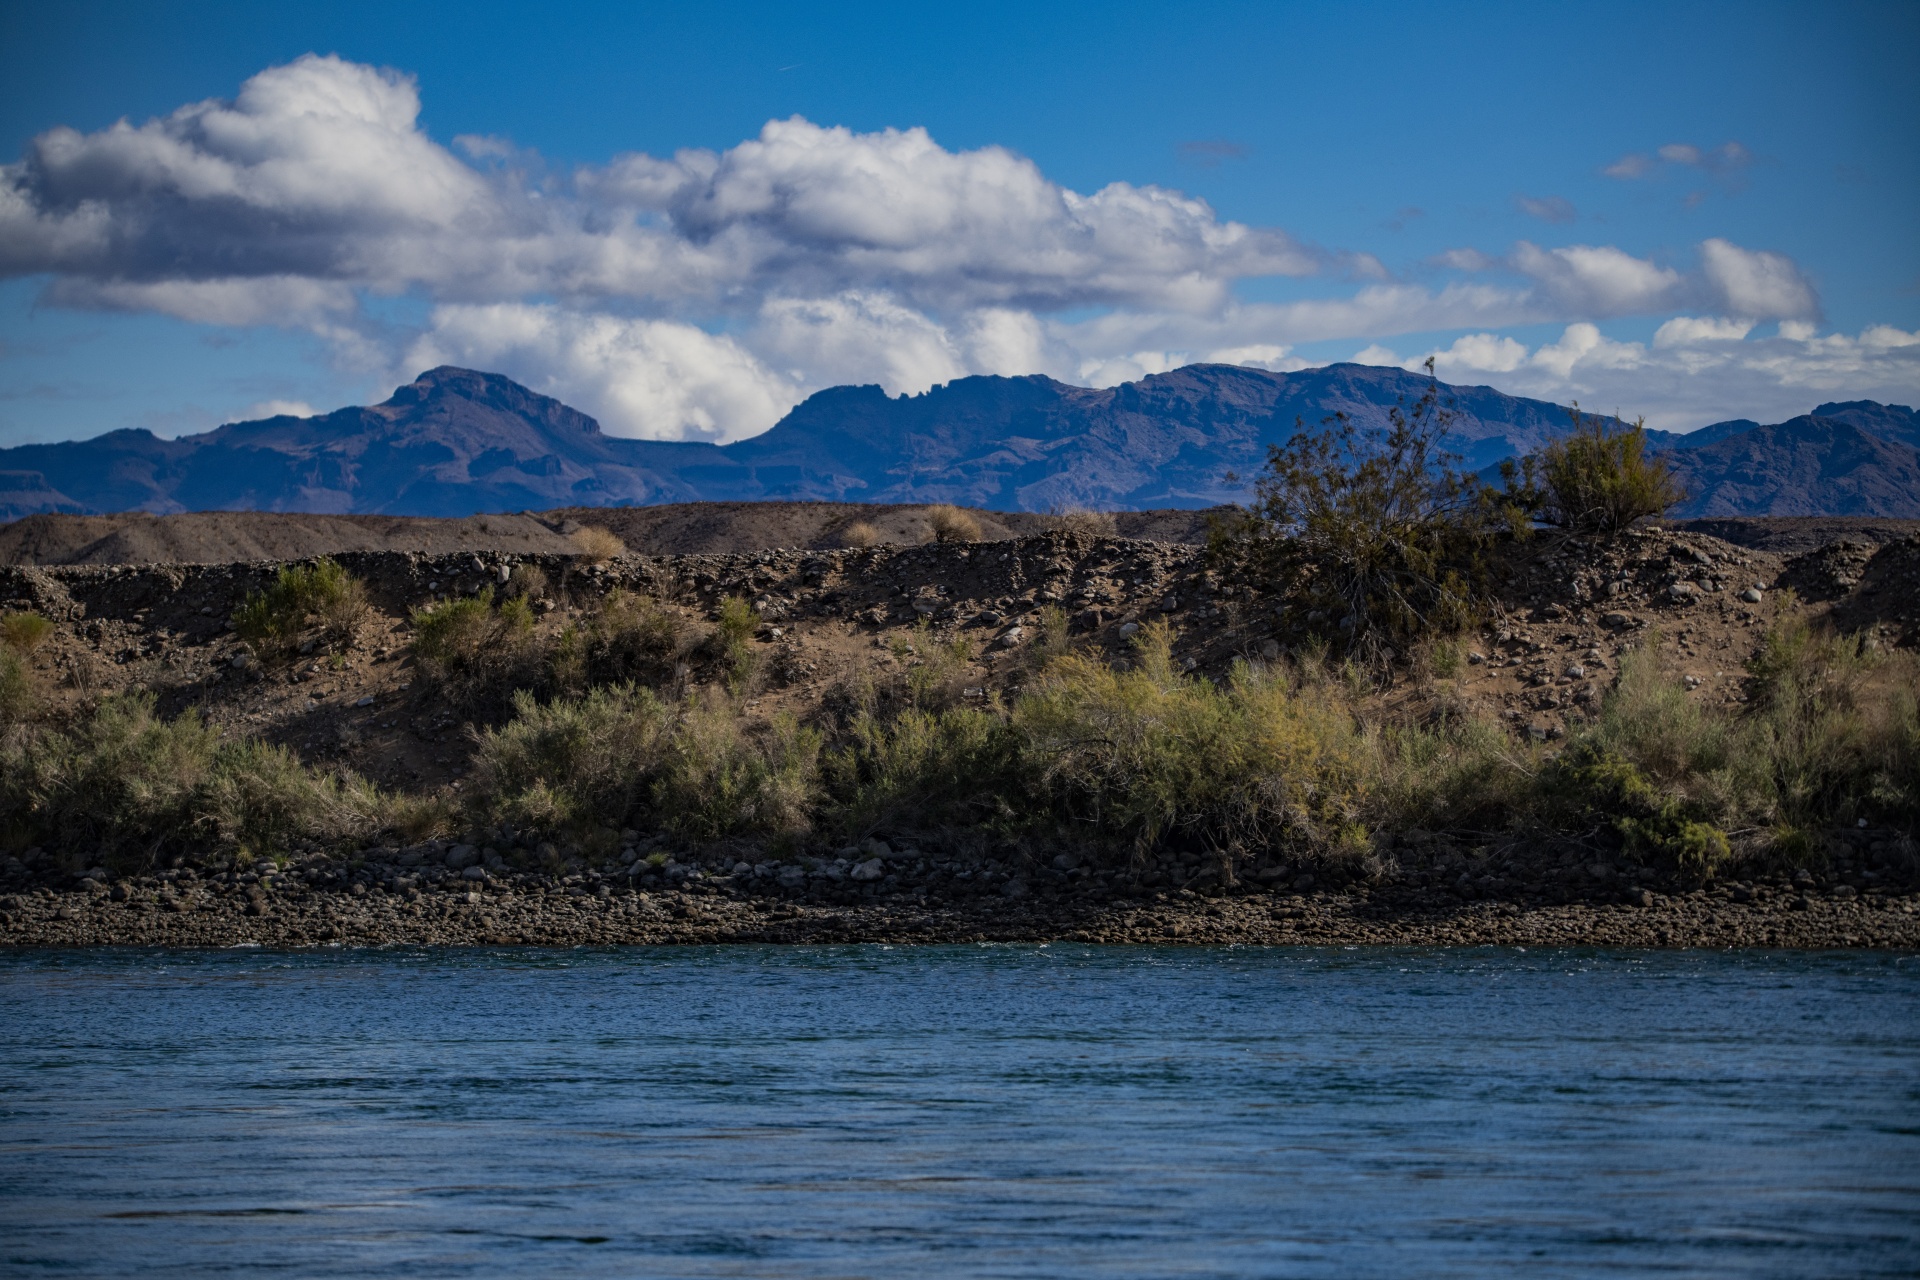 A river flows along the banks of Arizona